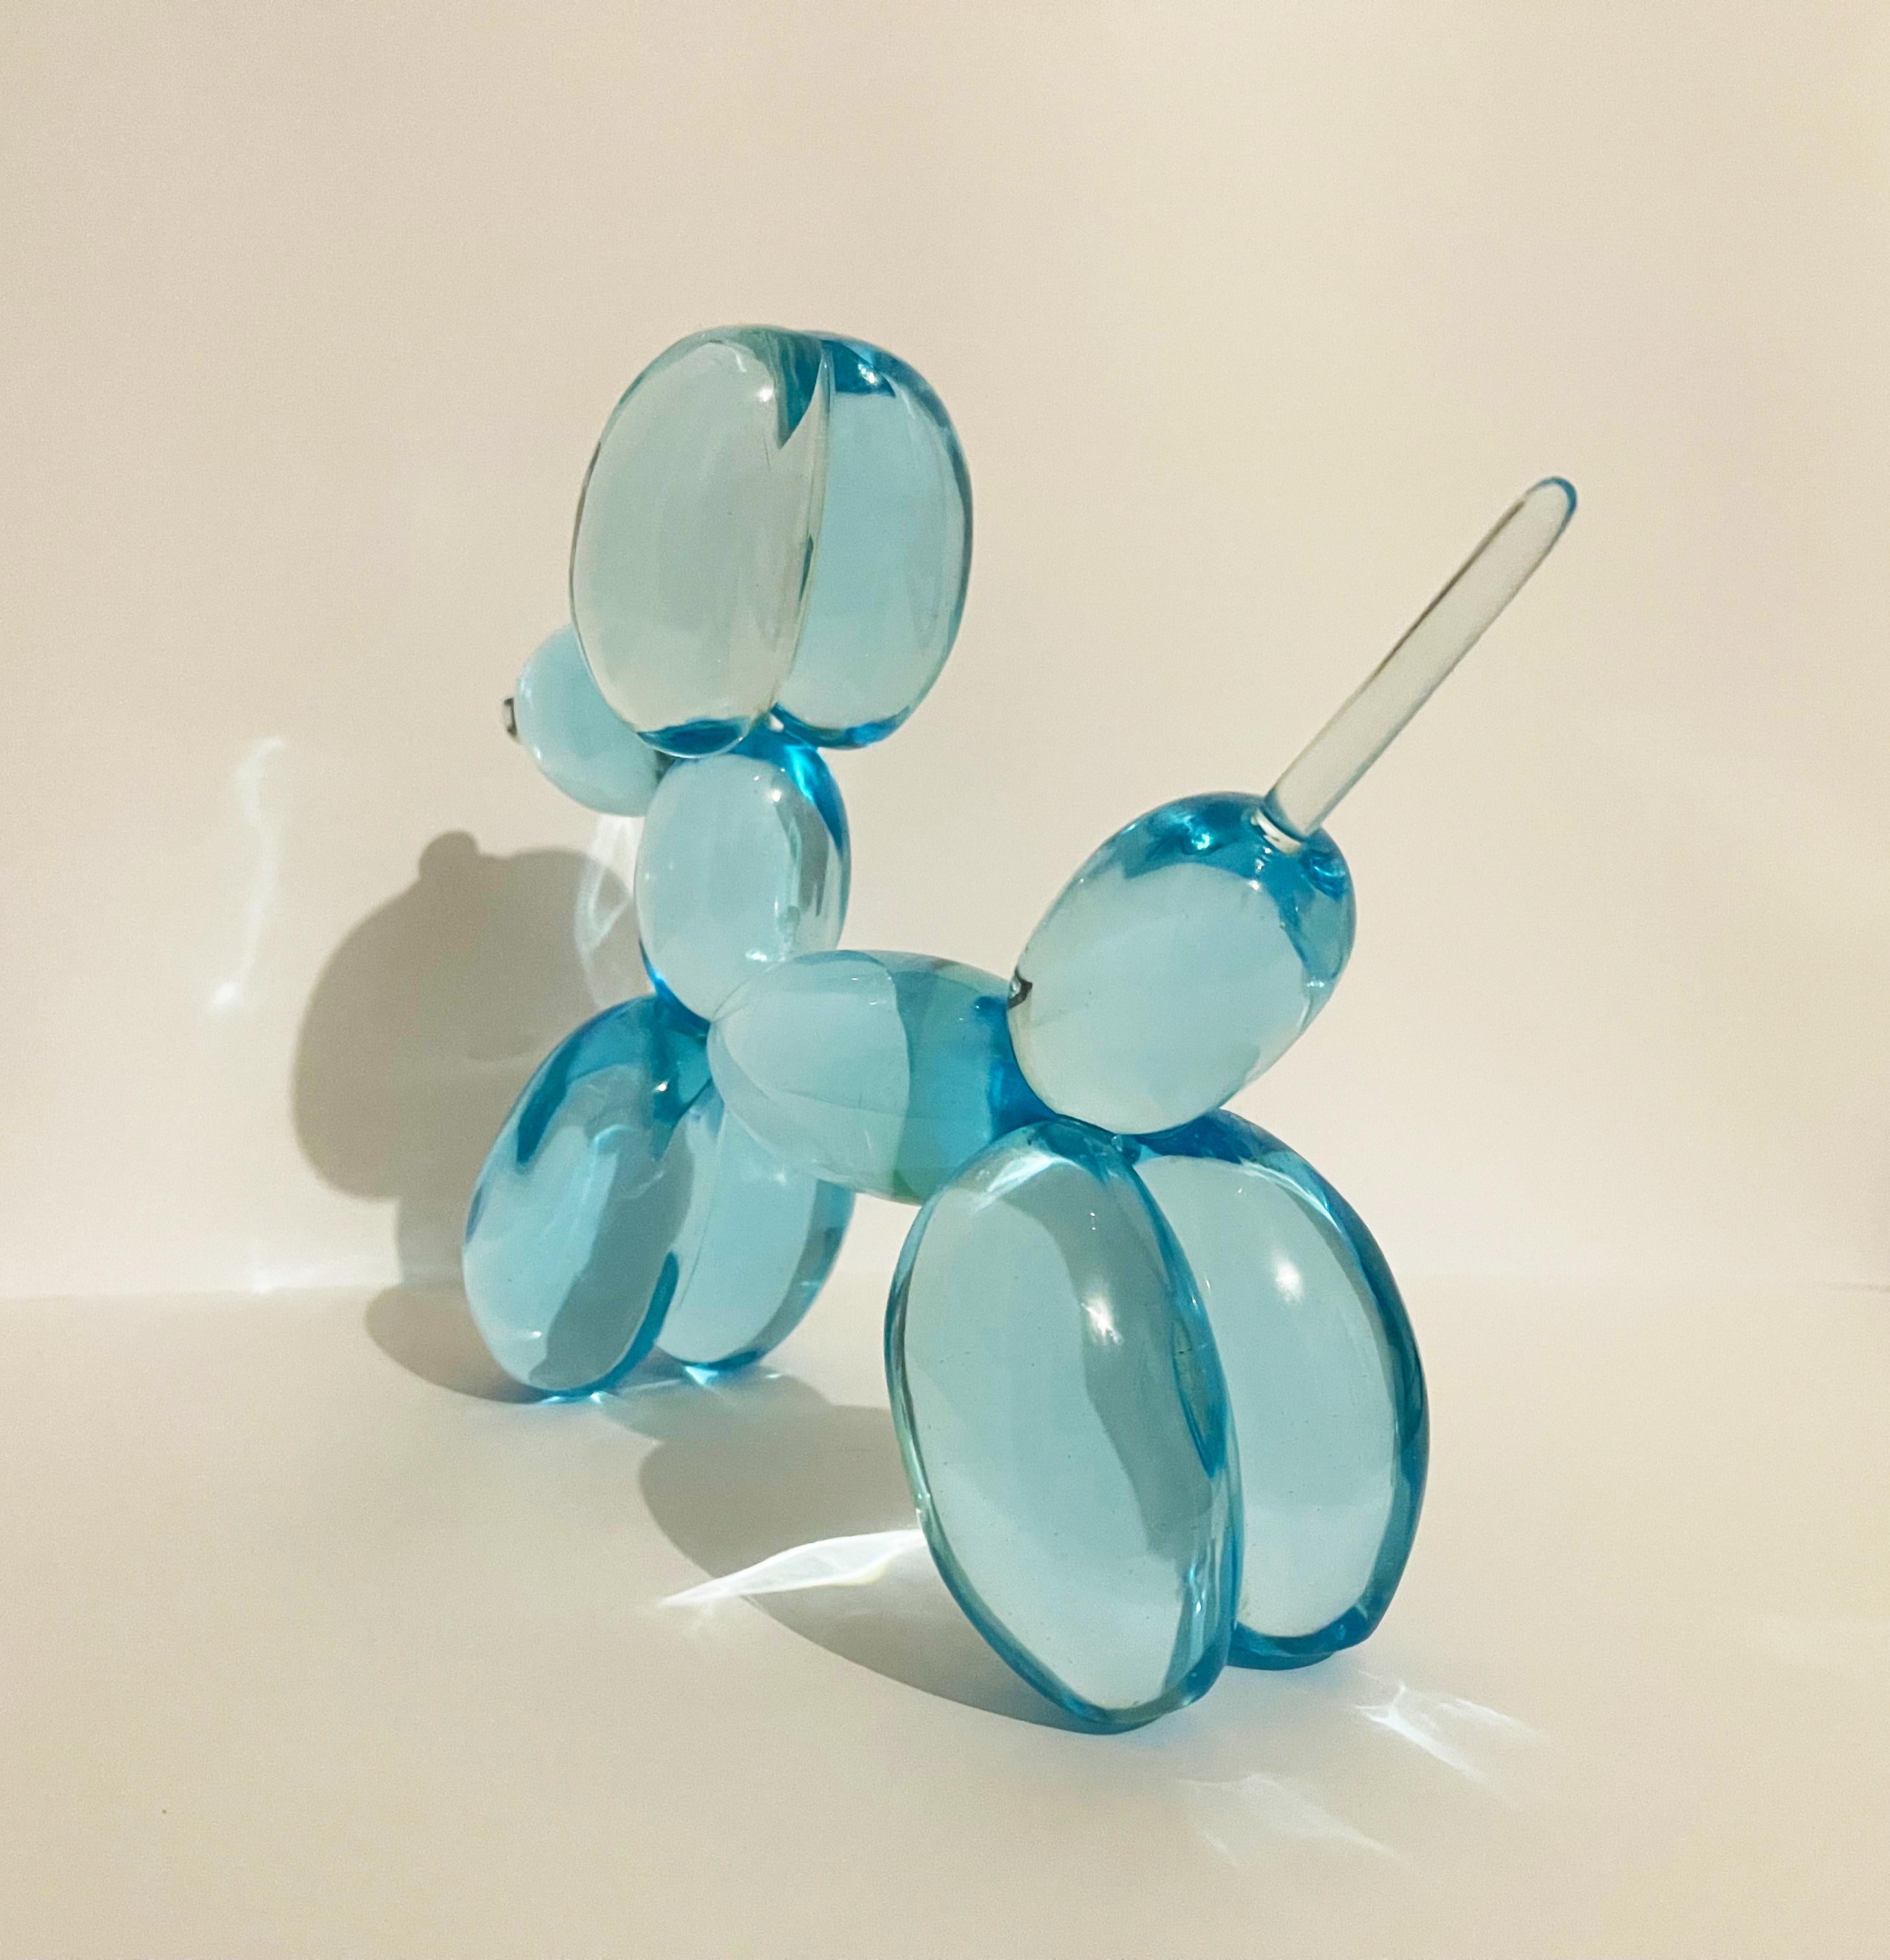 Italian Contemporary 'Dog' Handmade Light Blue Crystal Sculpture by Ghirò Studio